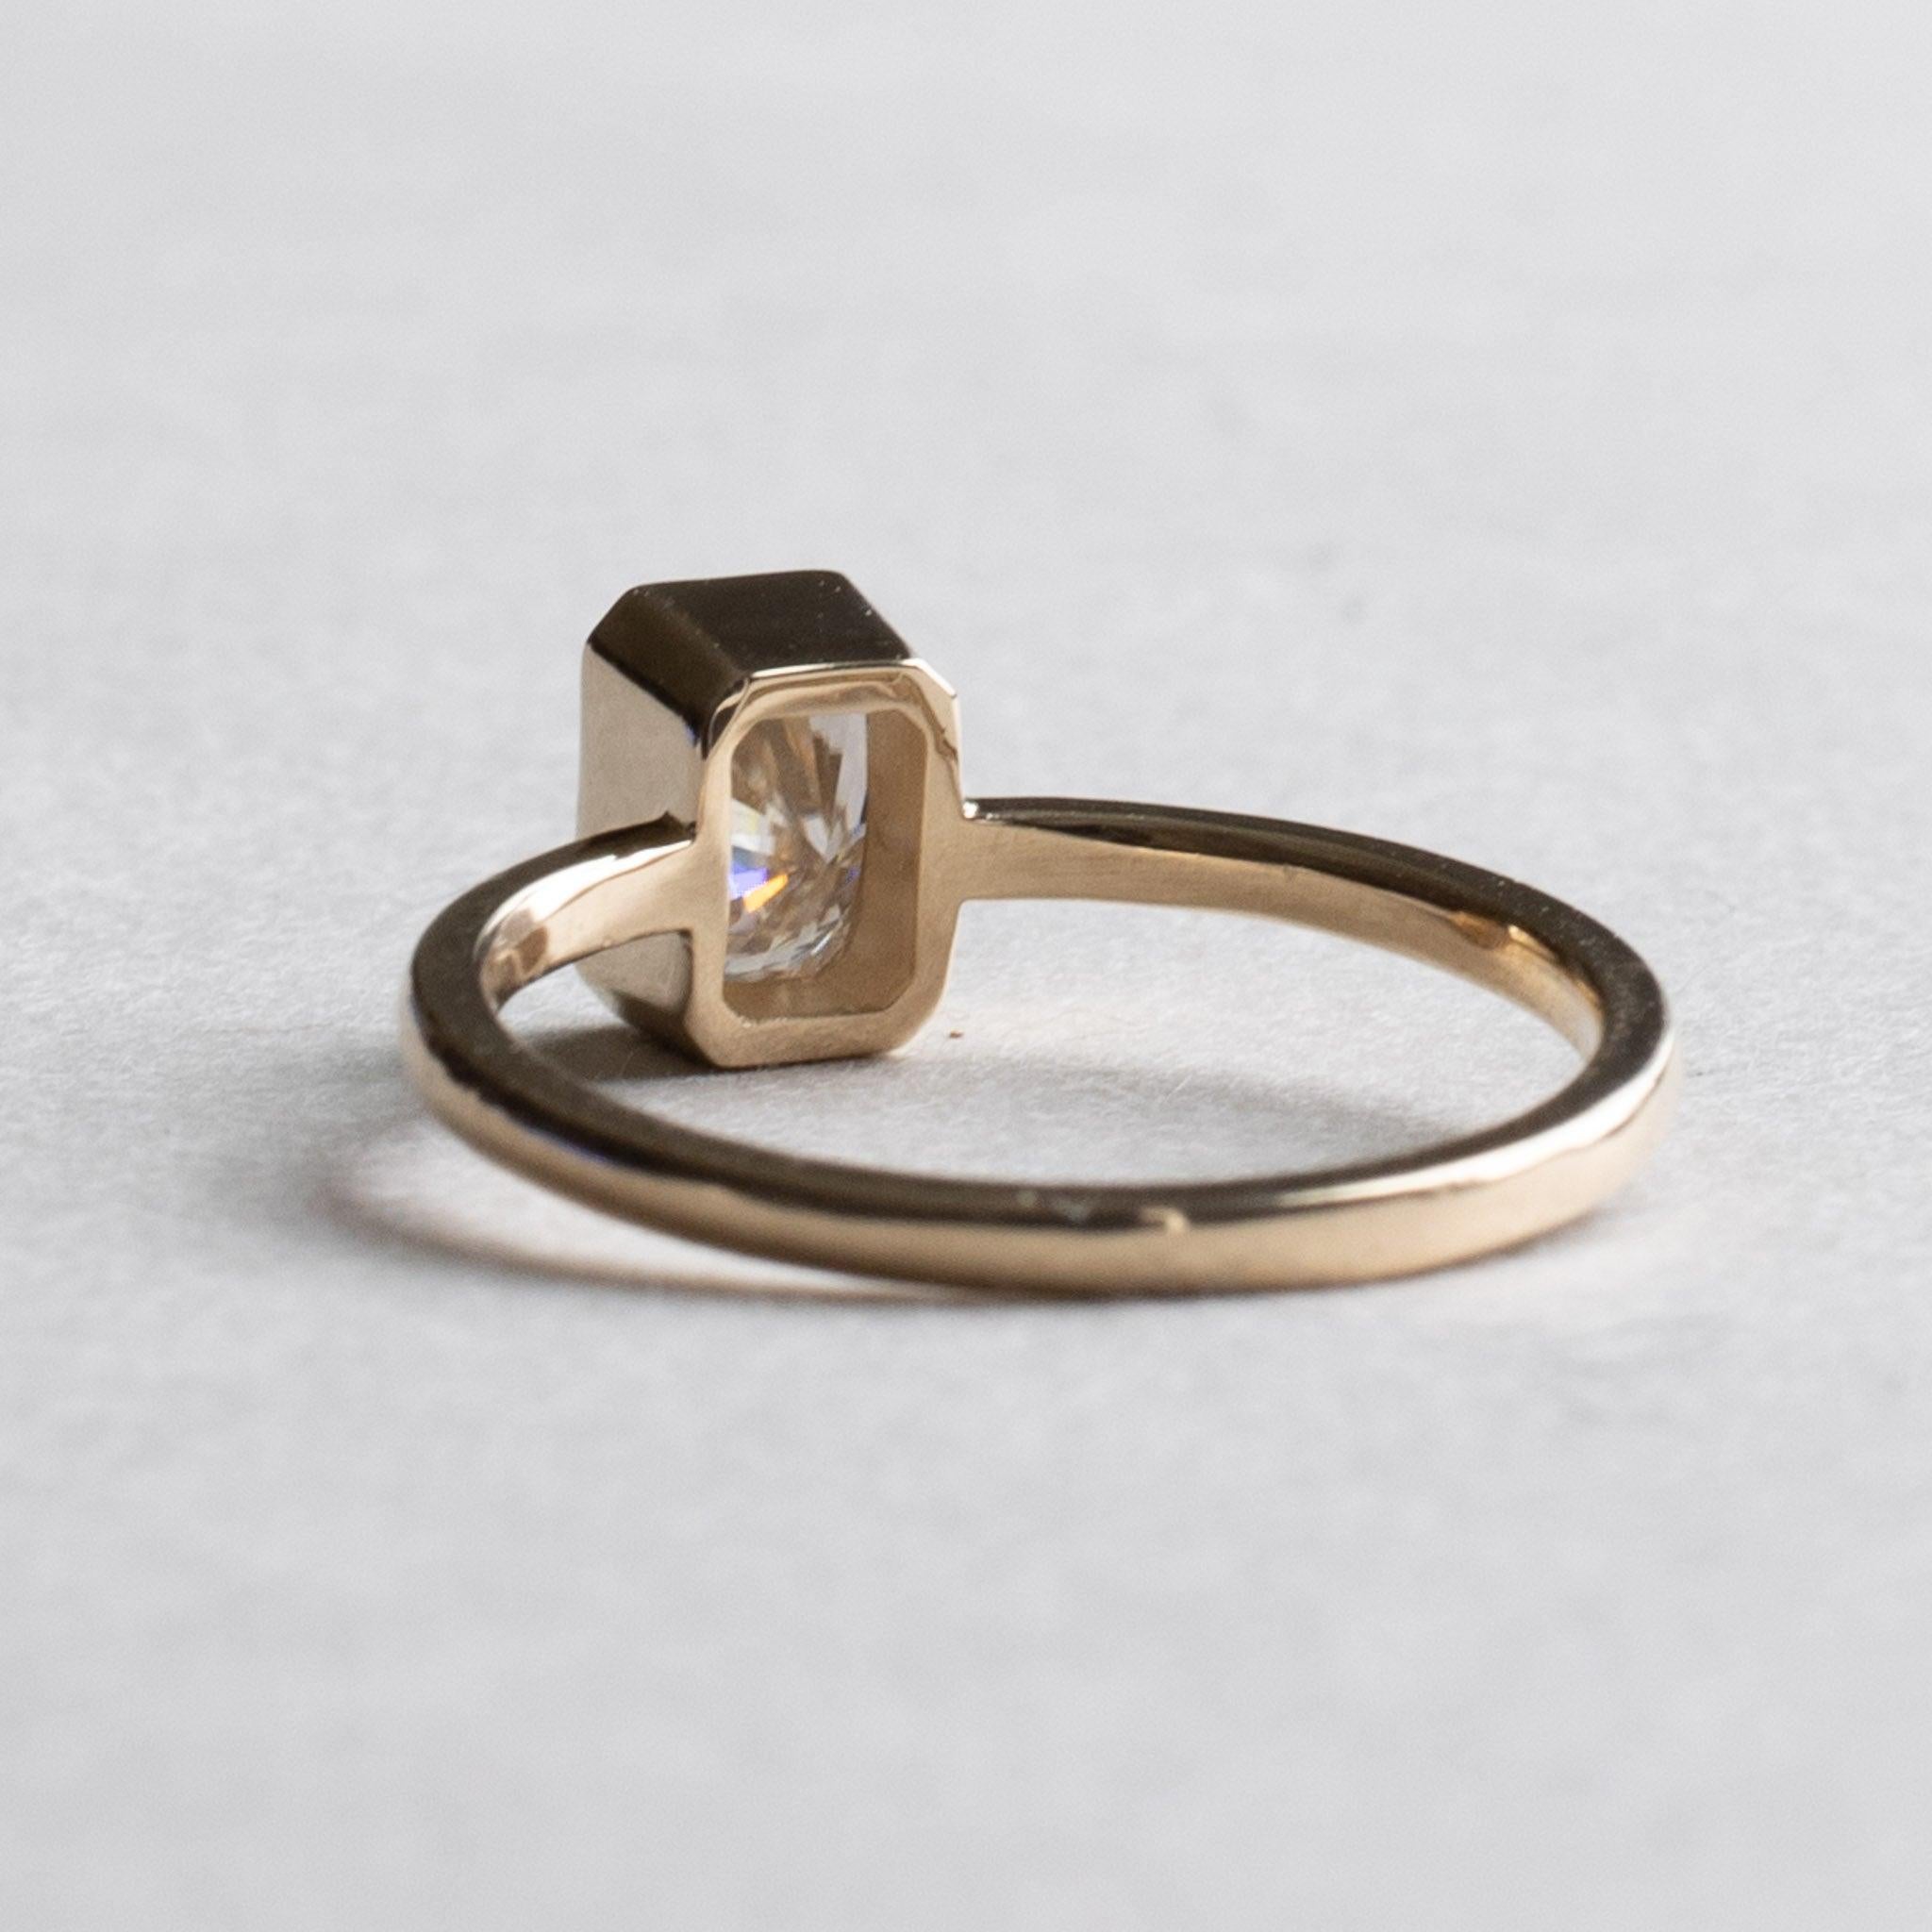 For Sale:  1 Carat Radiant Emerald Cut Diamond Ring 18k Gold 3